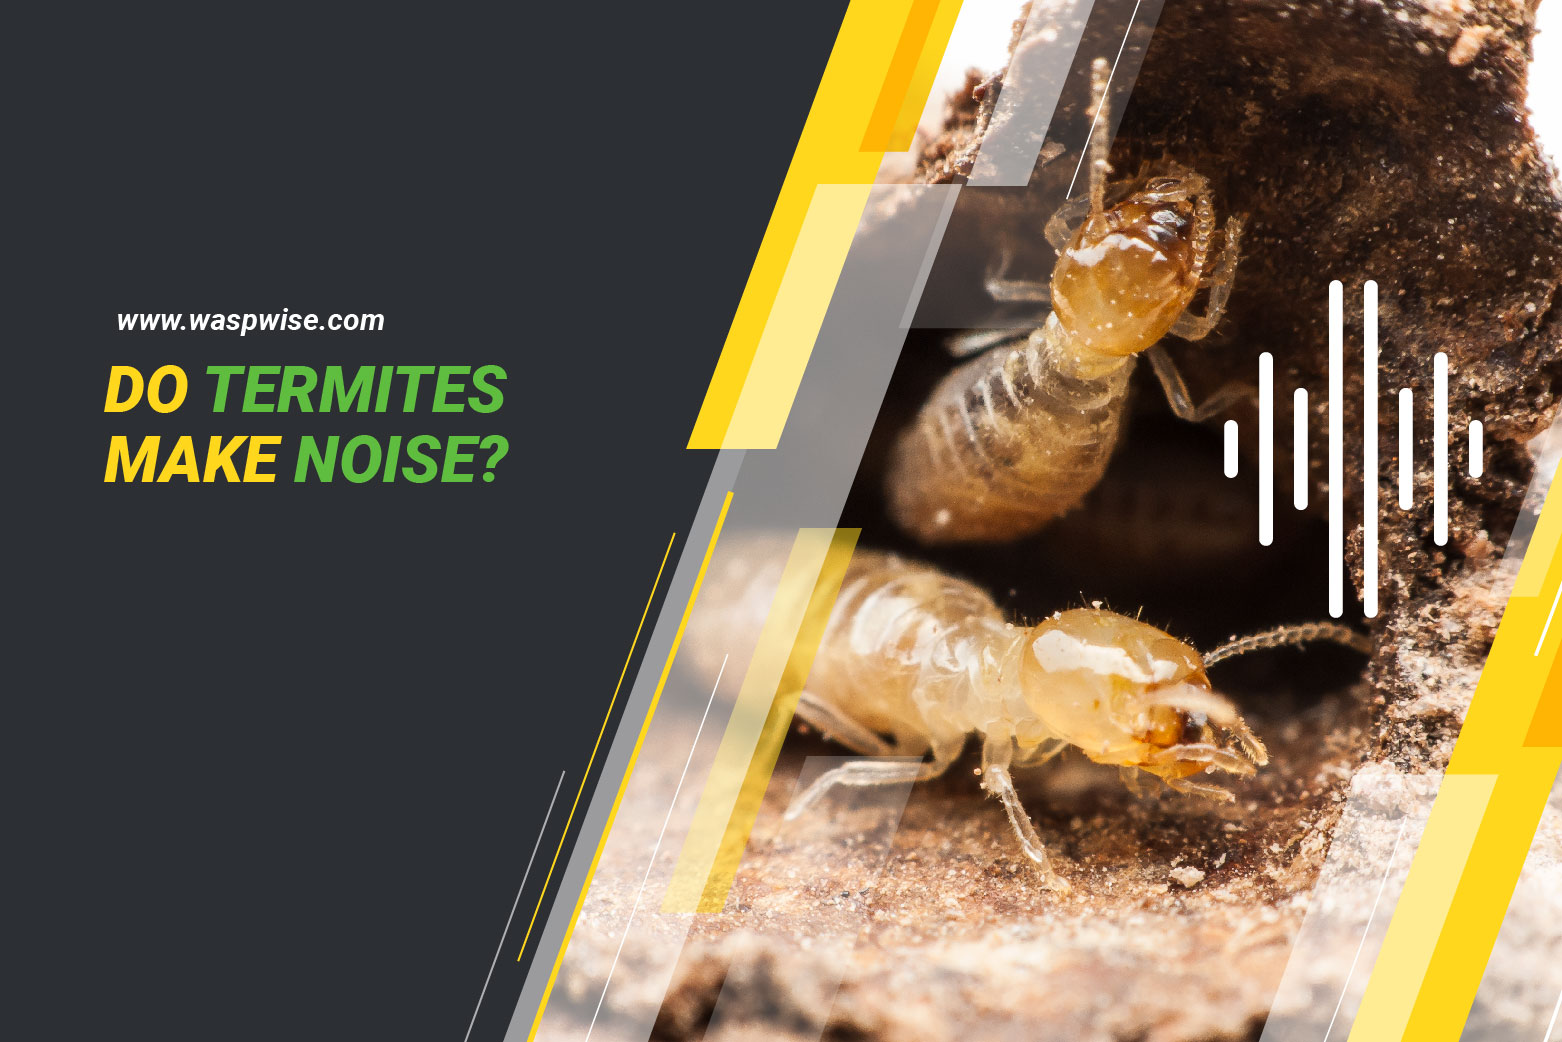 Do termites make noise